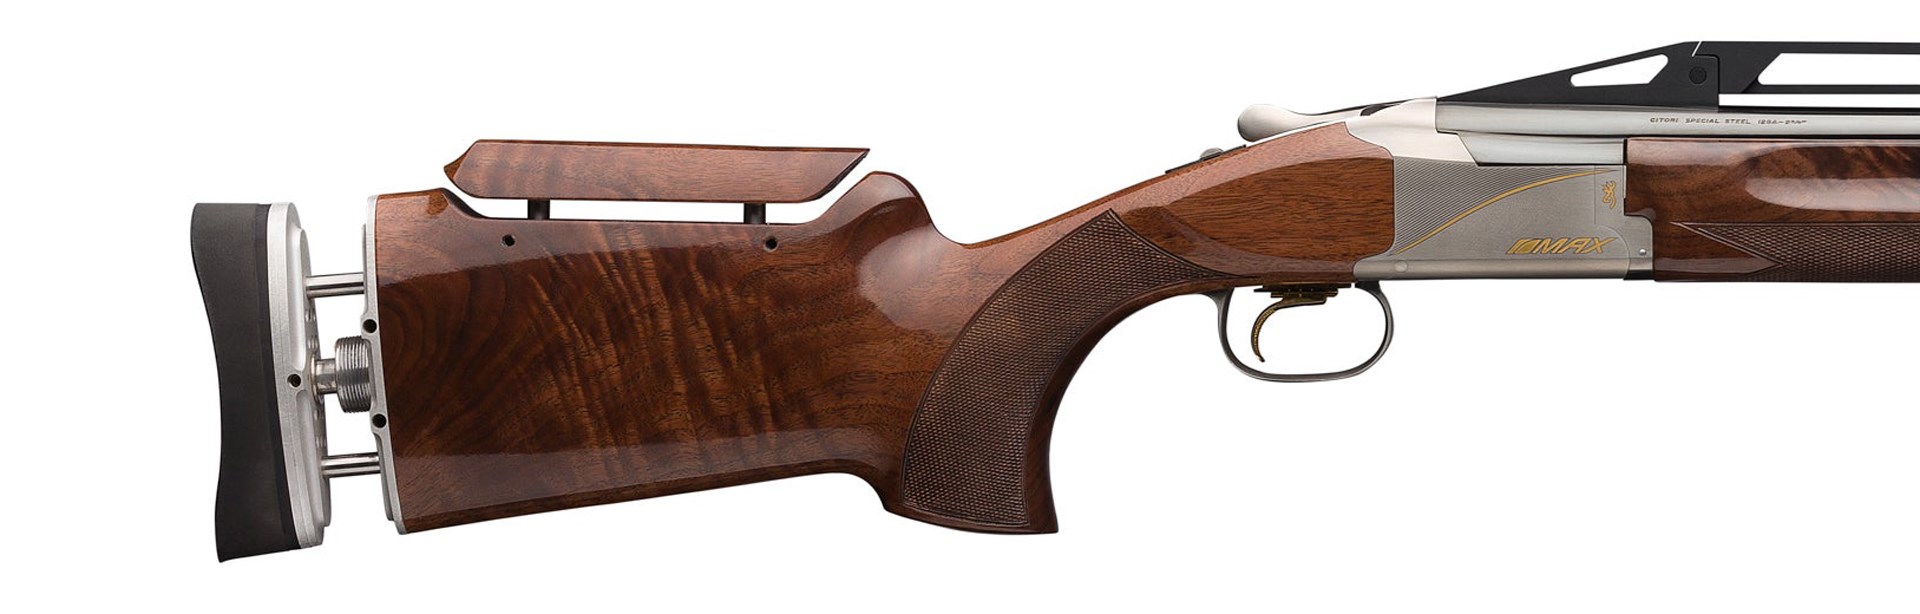 Browning Citori 725 Trap Max shotgun cropped on buttstock example target full pistol grip wood